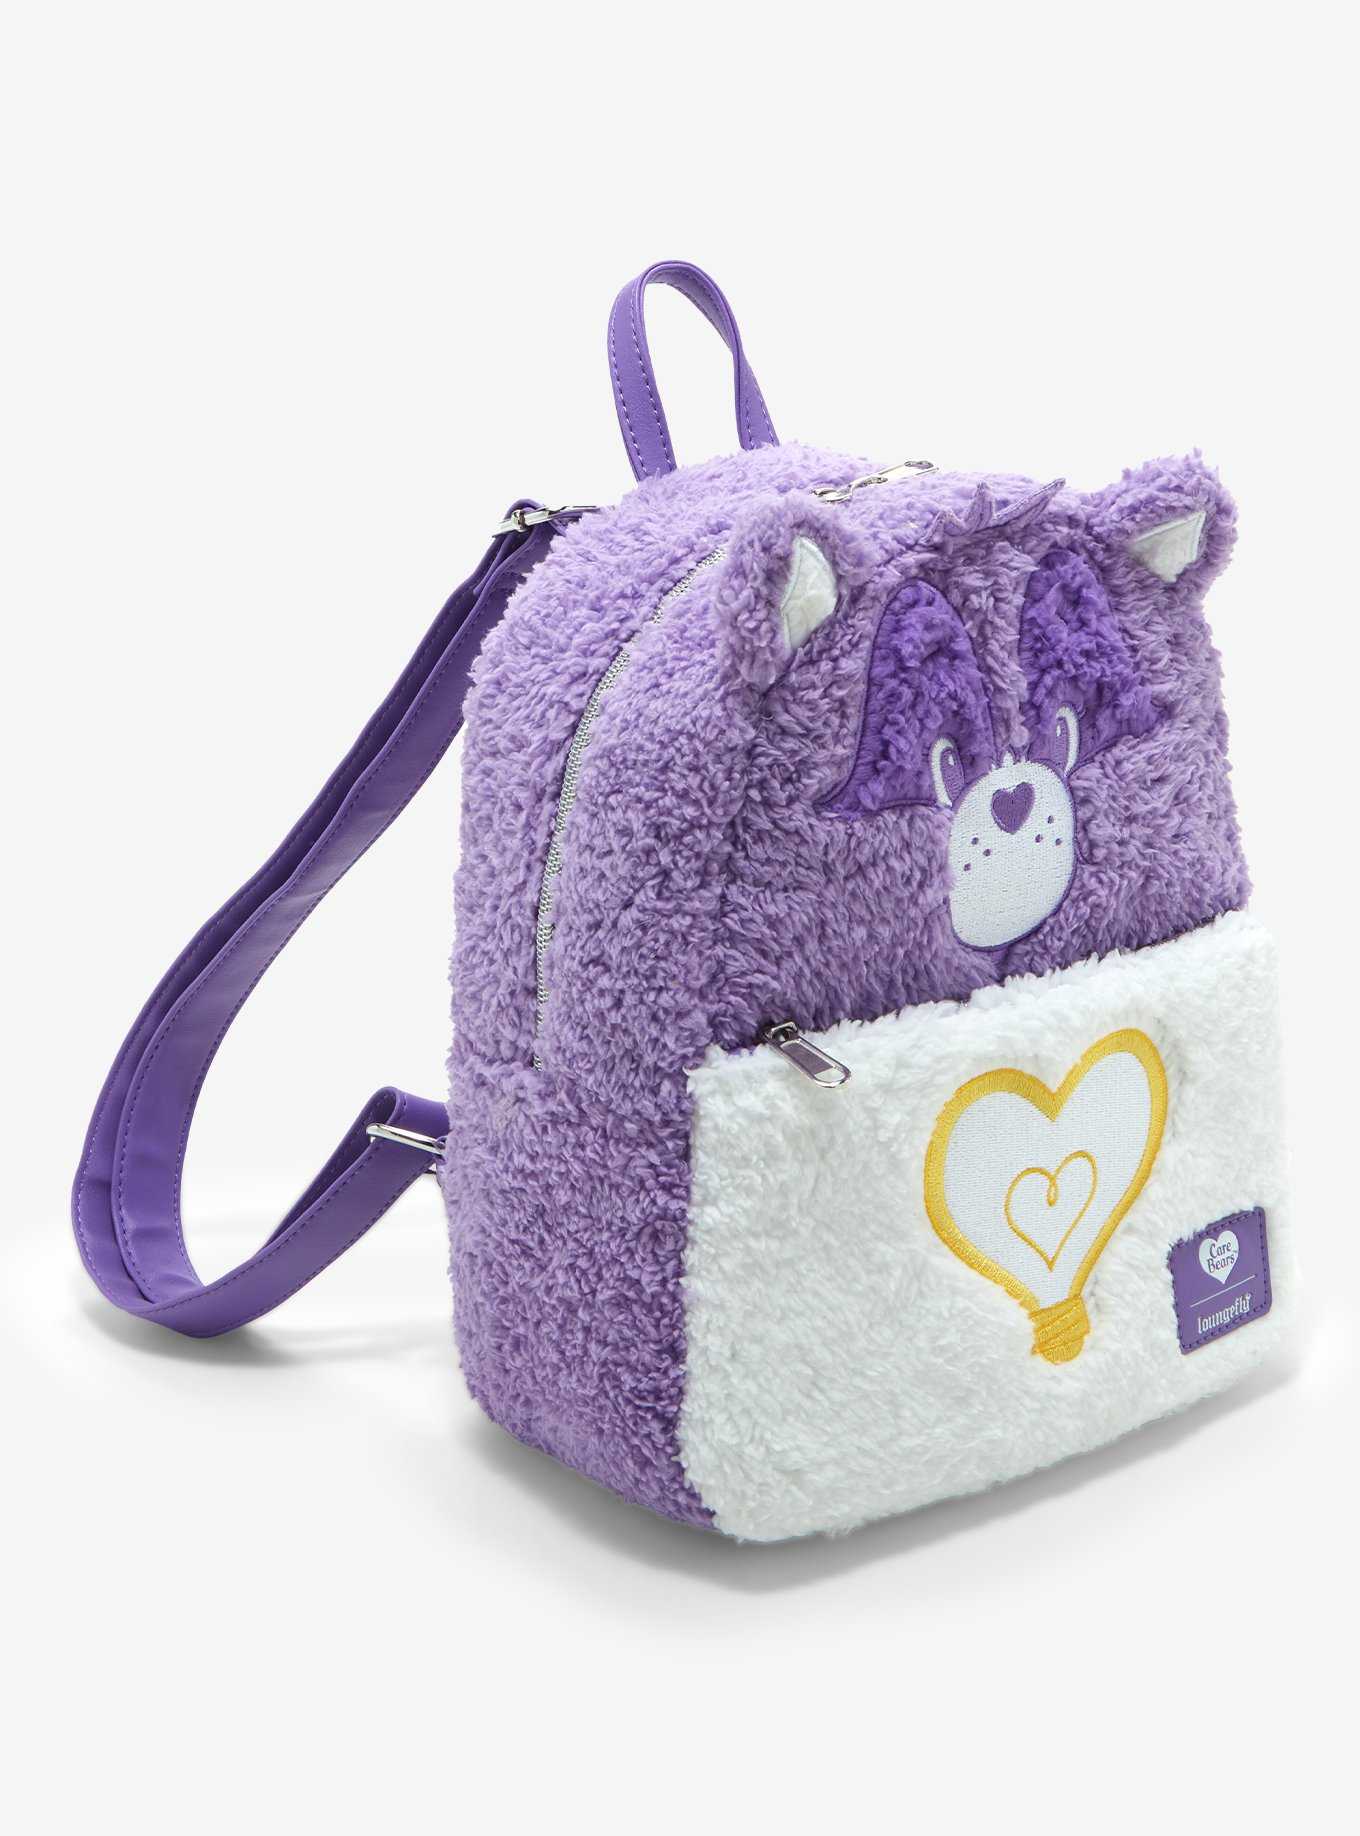 Loungefly Care Bears Bright Heart Raccoon Fuzzy Mini Backpack, , hi-res